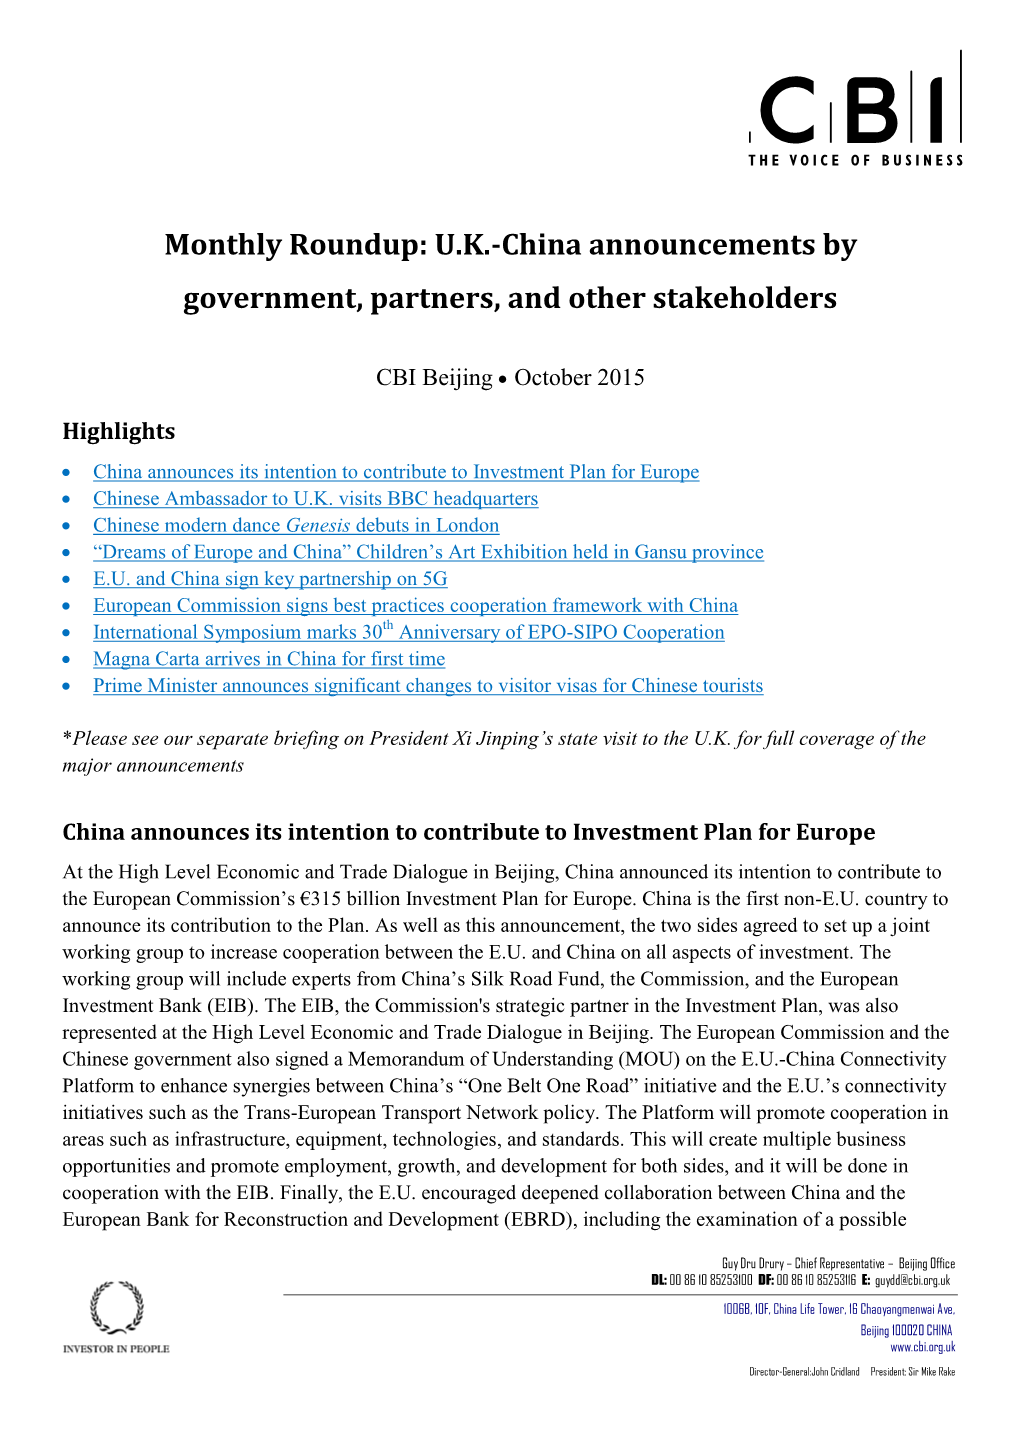 Download CBI China, U.K.-China Monthly Roundup, October 2015